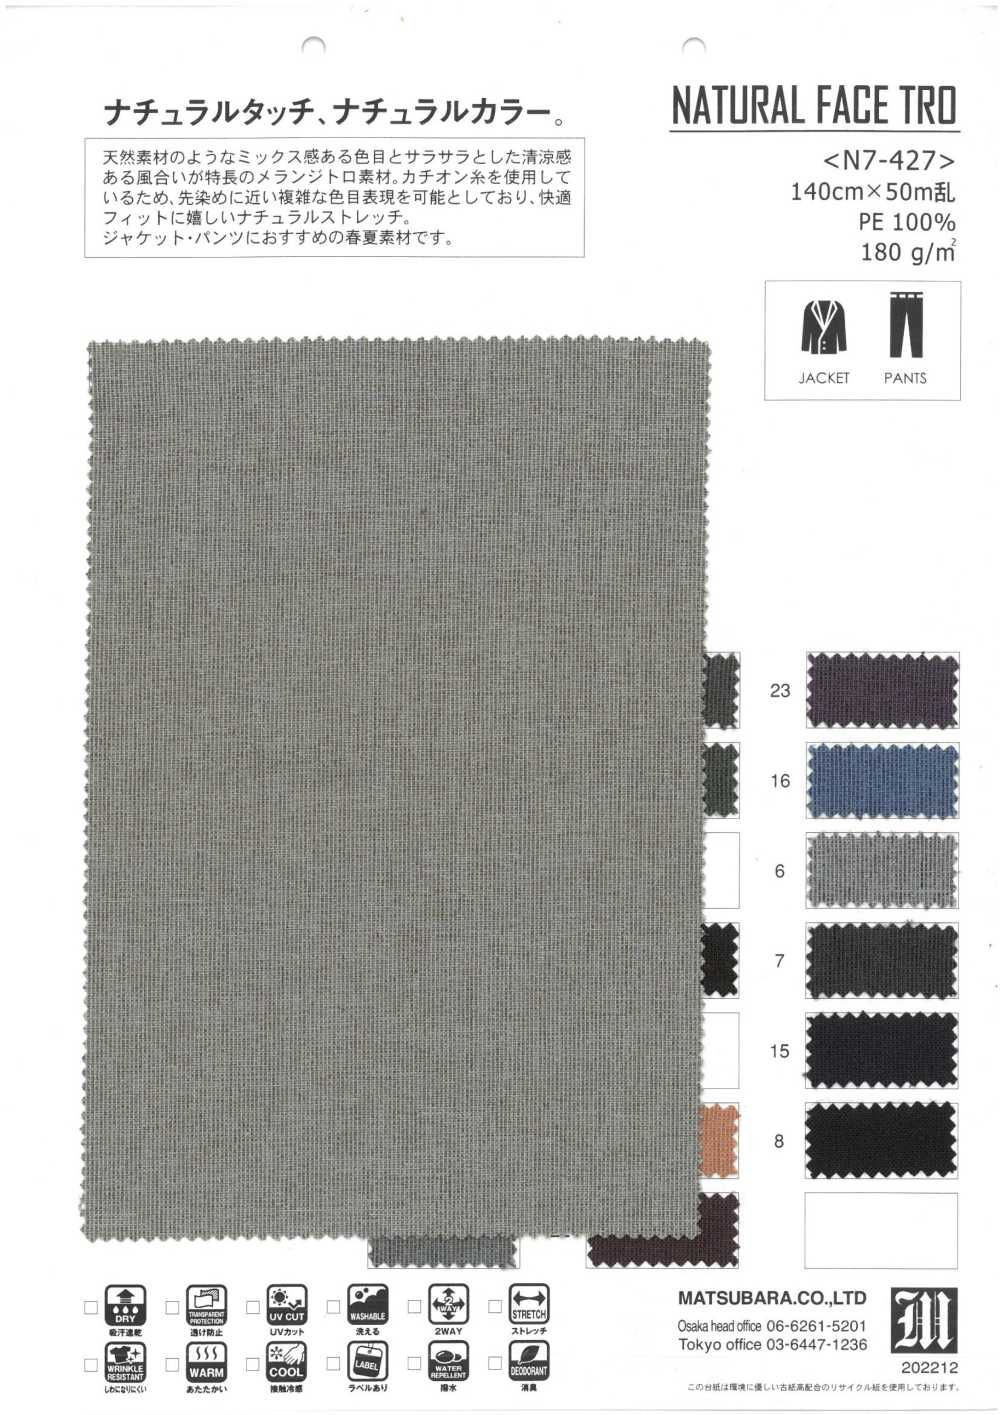 N7-427 NATURAL FACE TRO[Textile / Fabric] Matsubara